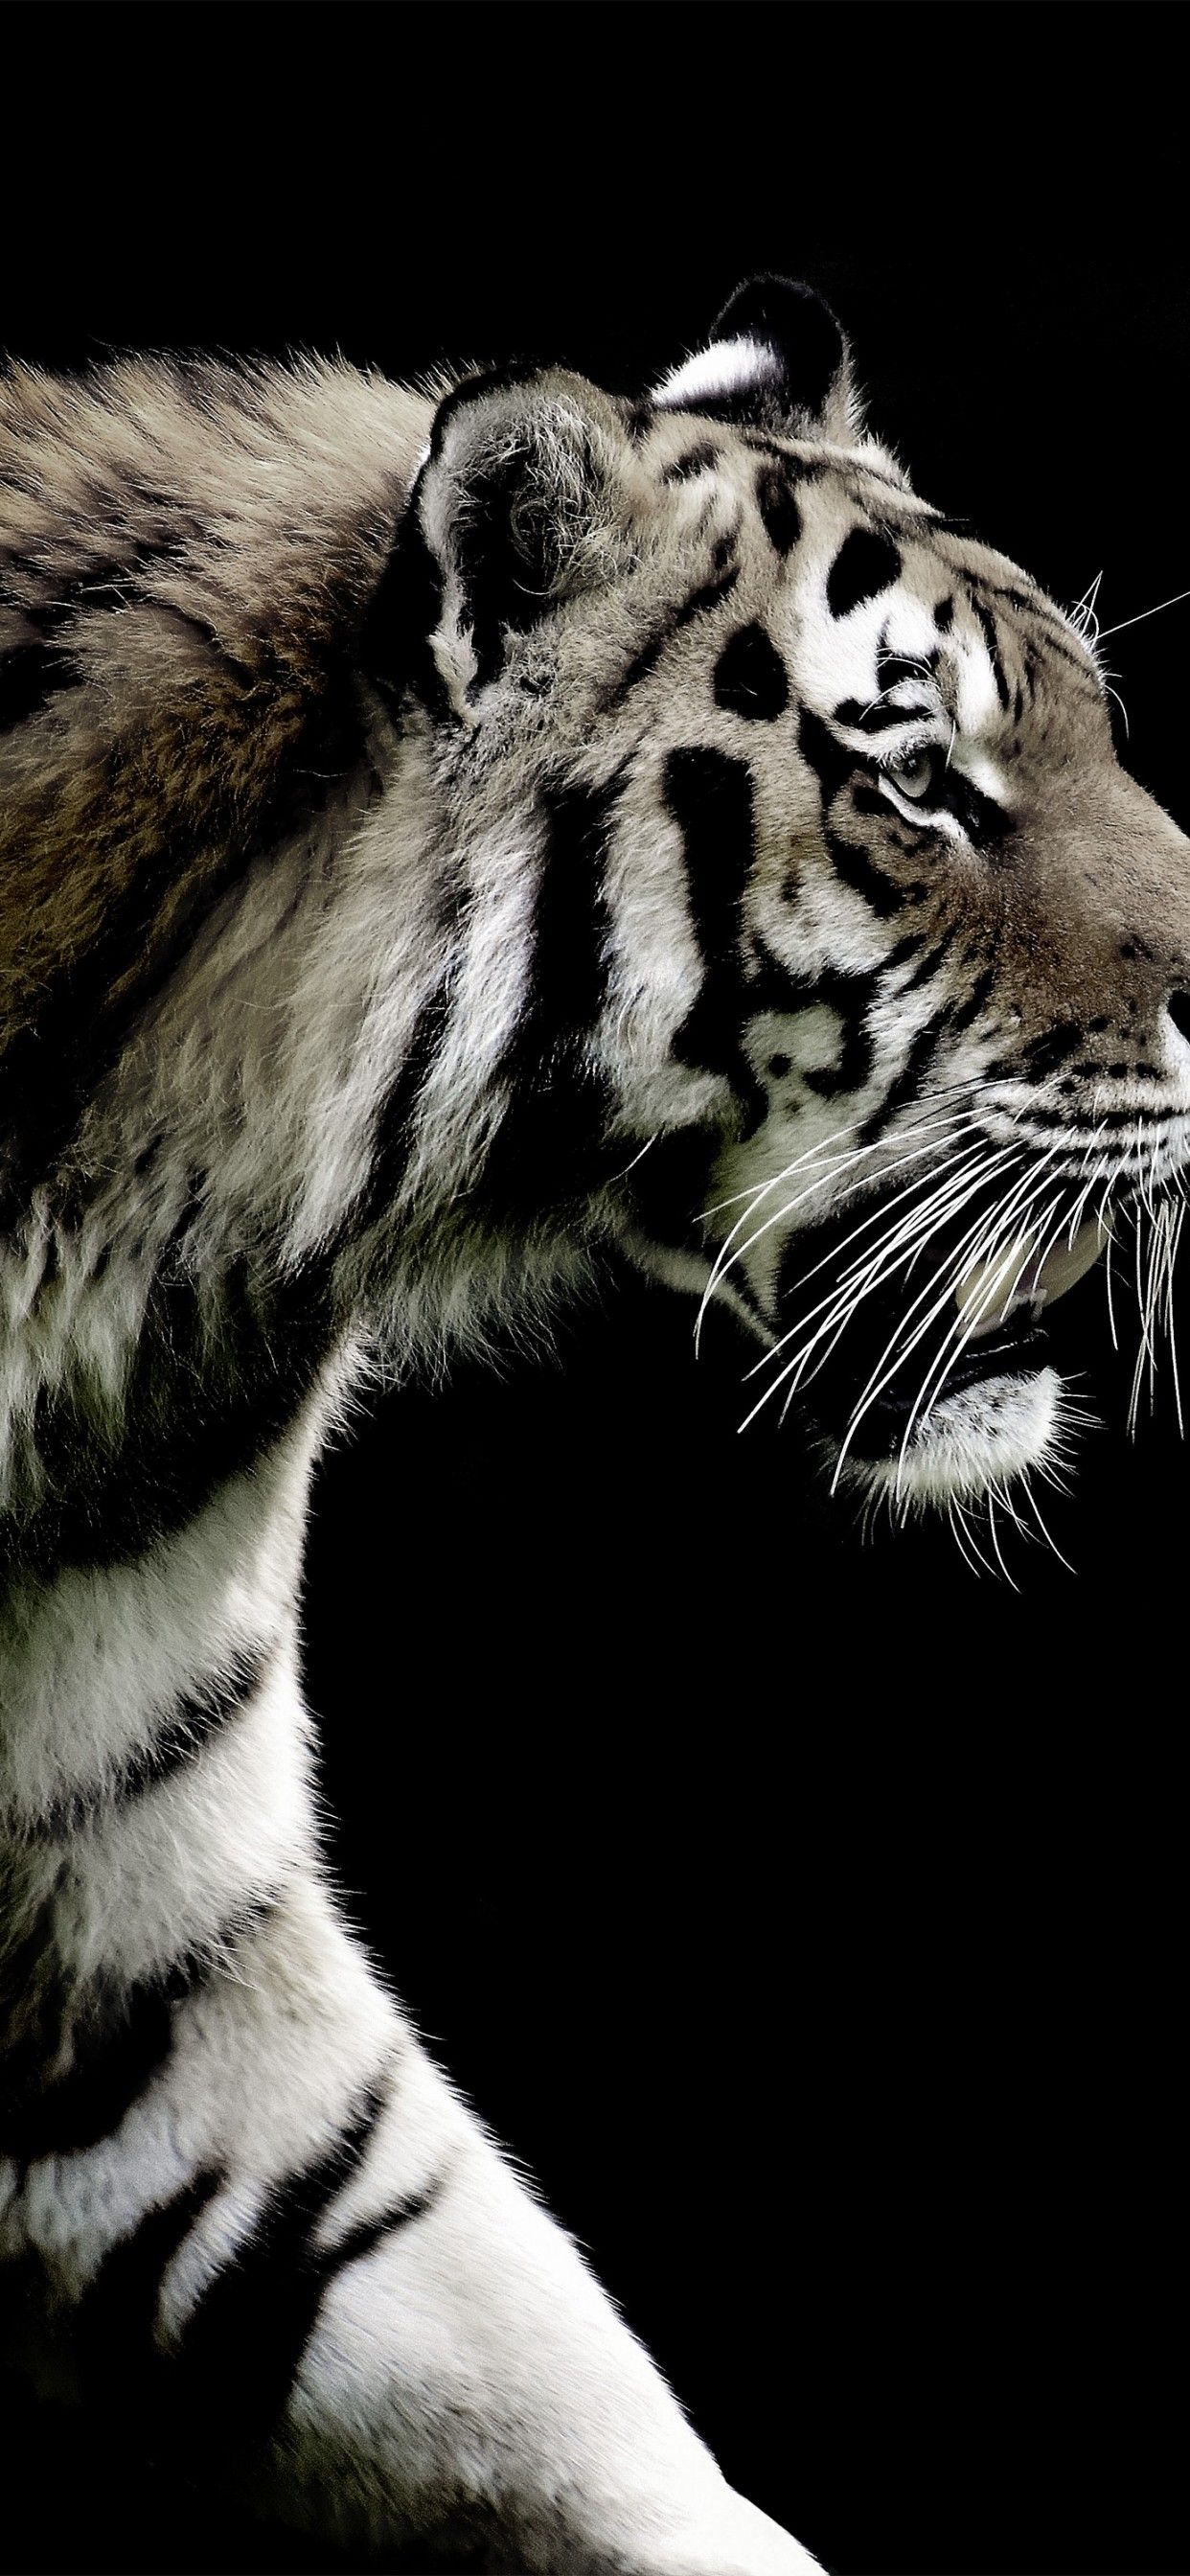 Tiger 4K Wallpaper, Brick wall, Wild animals, Animals